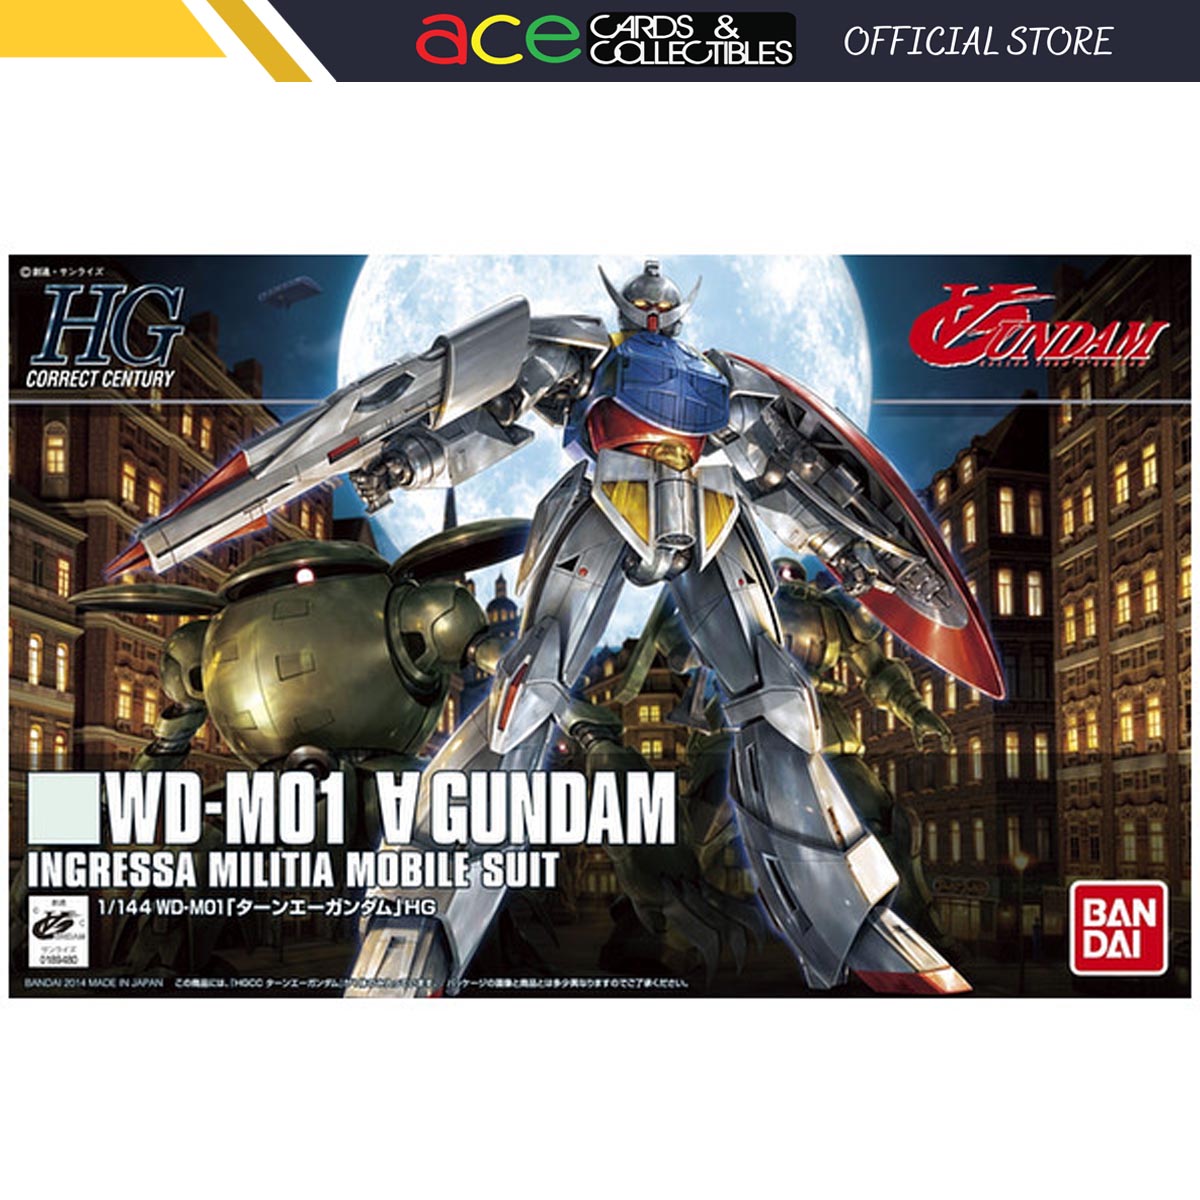 1/144 HGCC Turn A Gundam-Bandai-Ace Cards & Collectibles